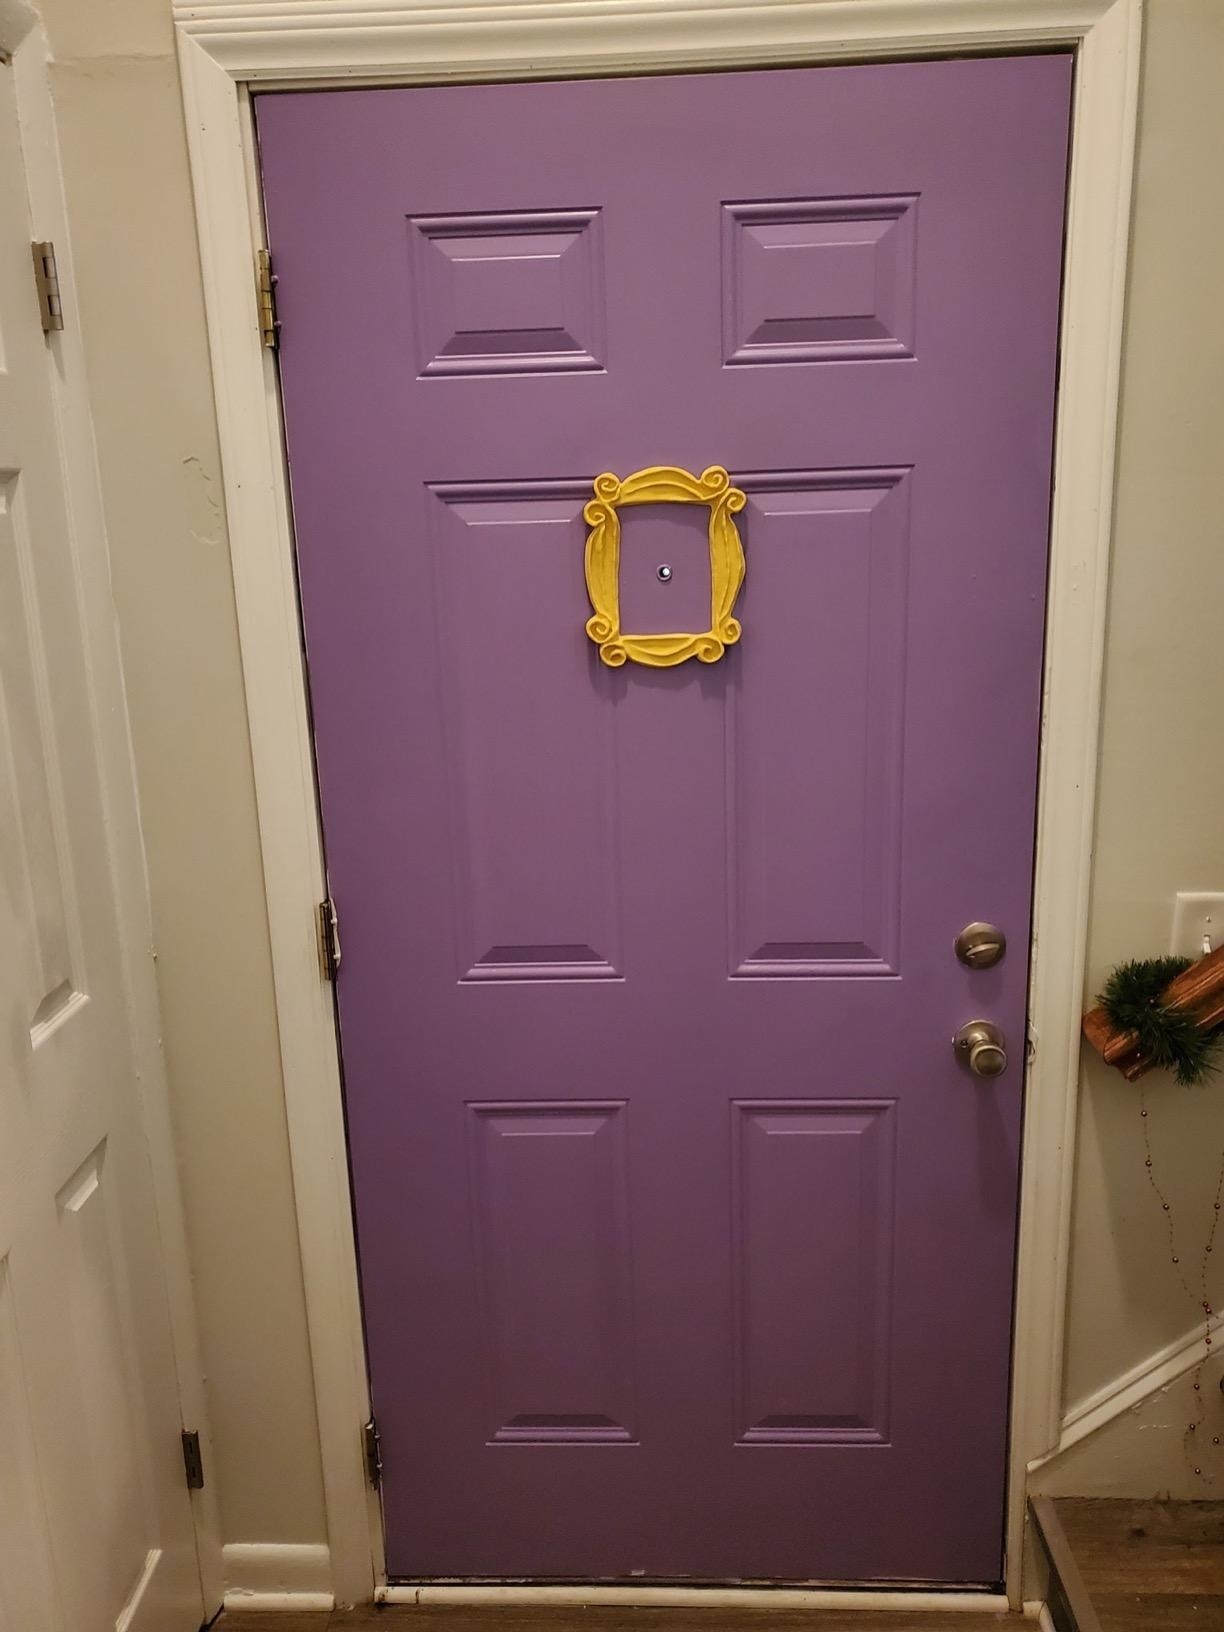 yellow frame on a purple door